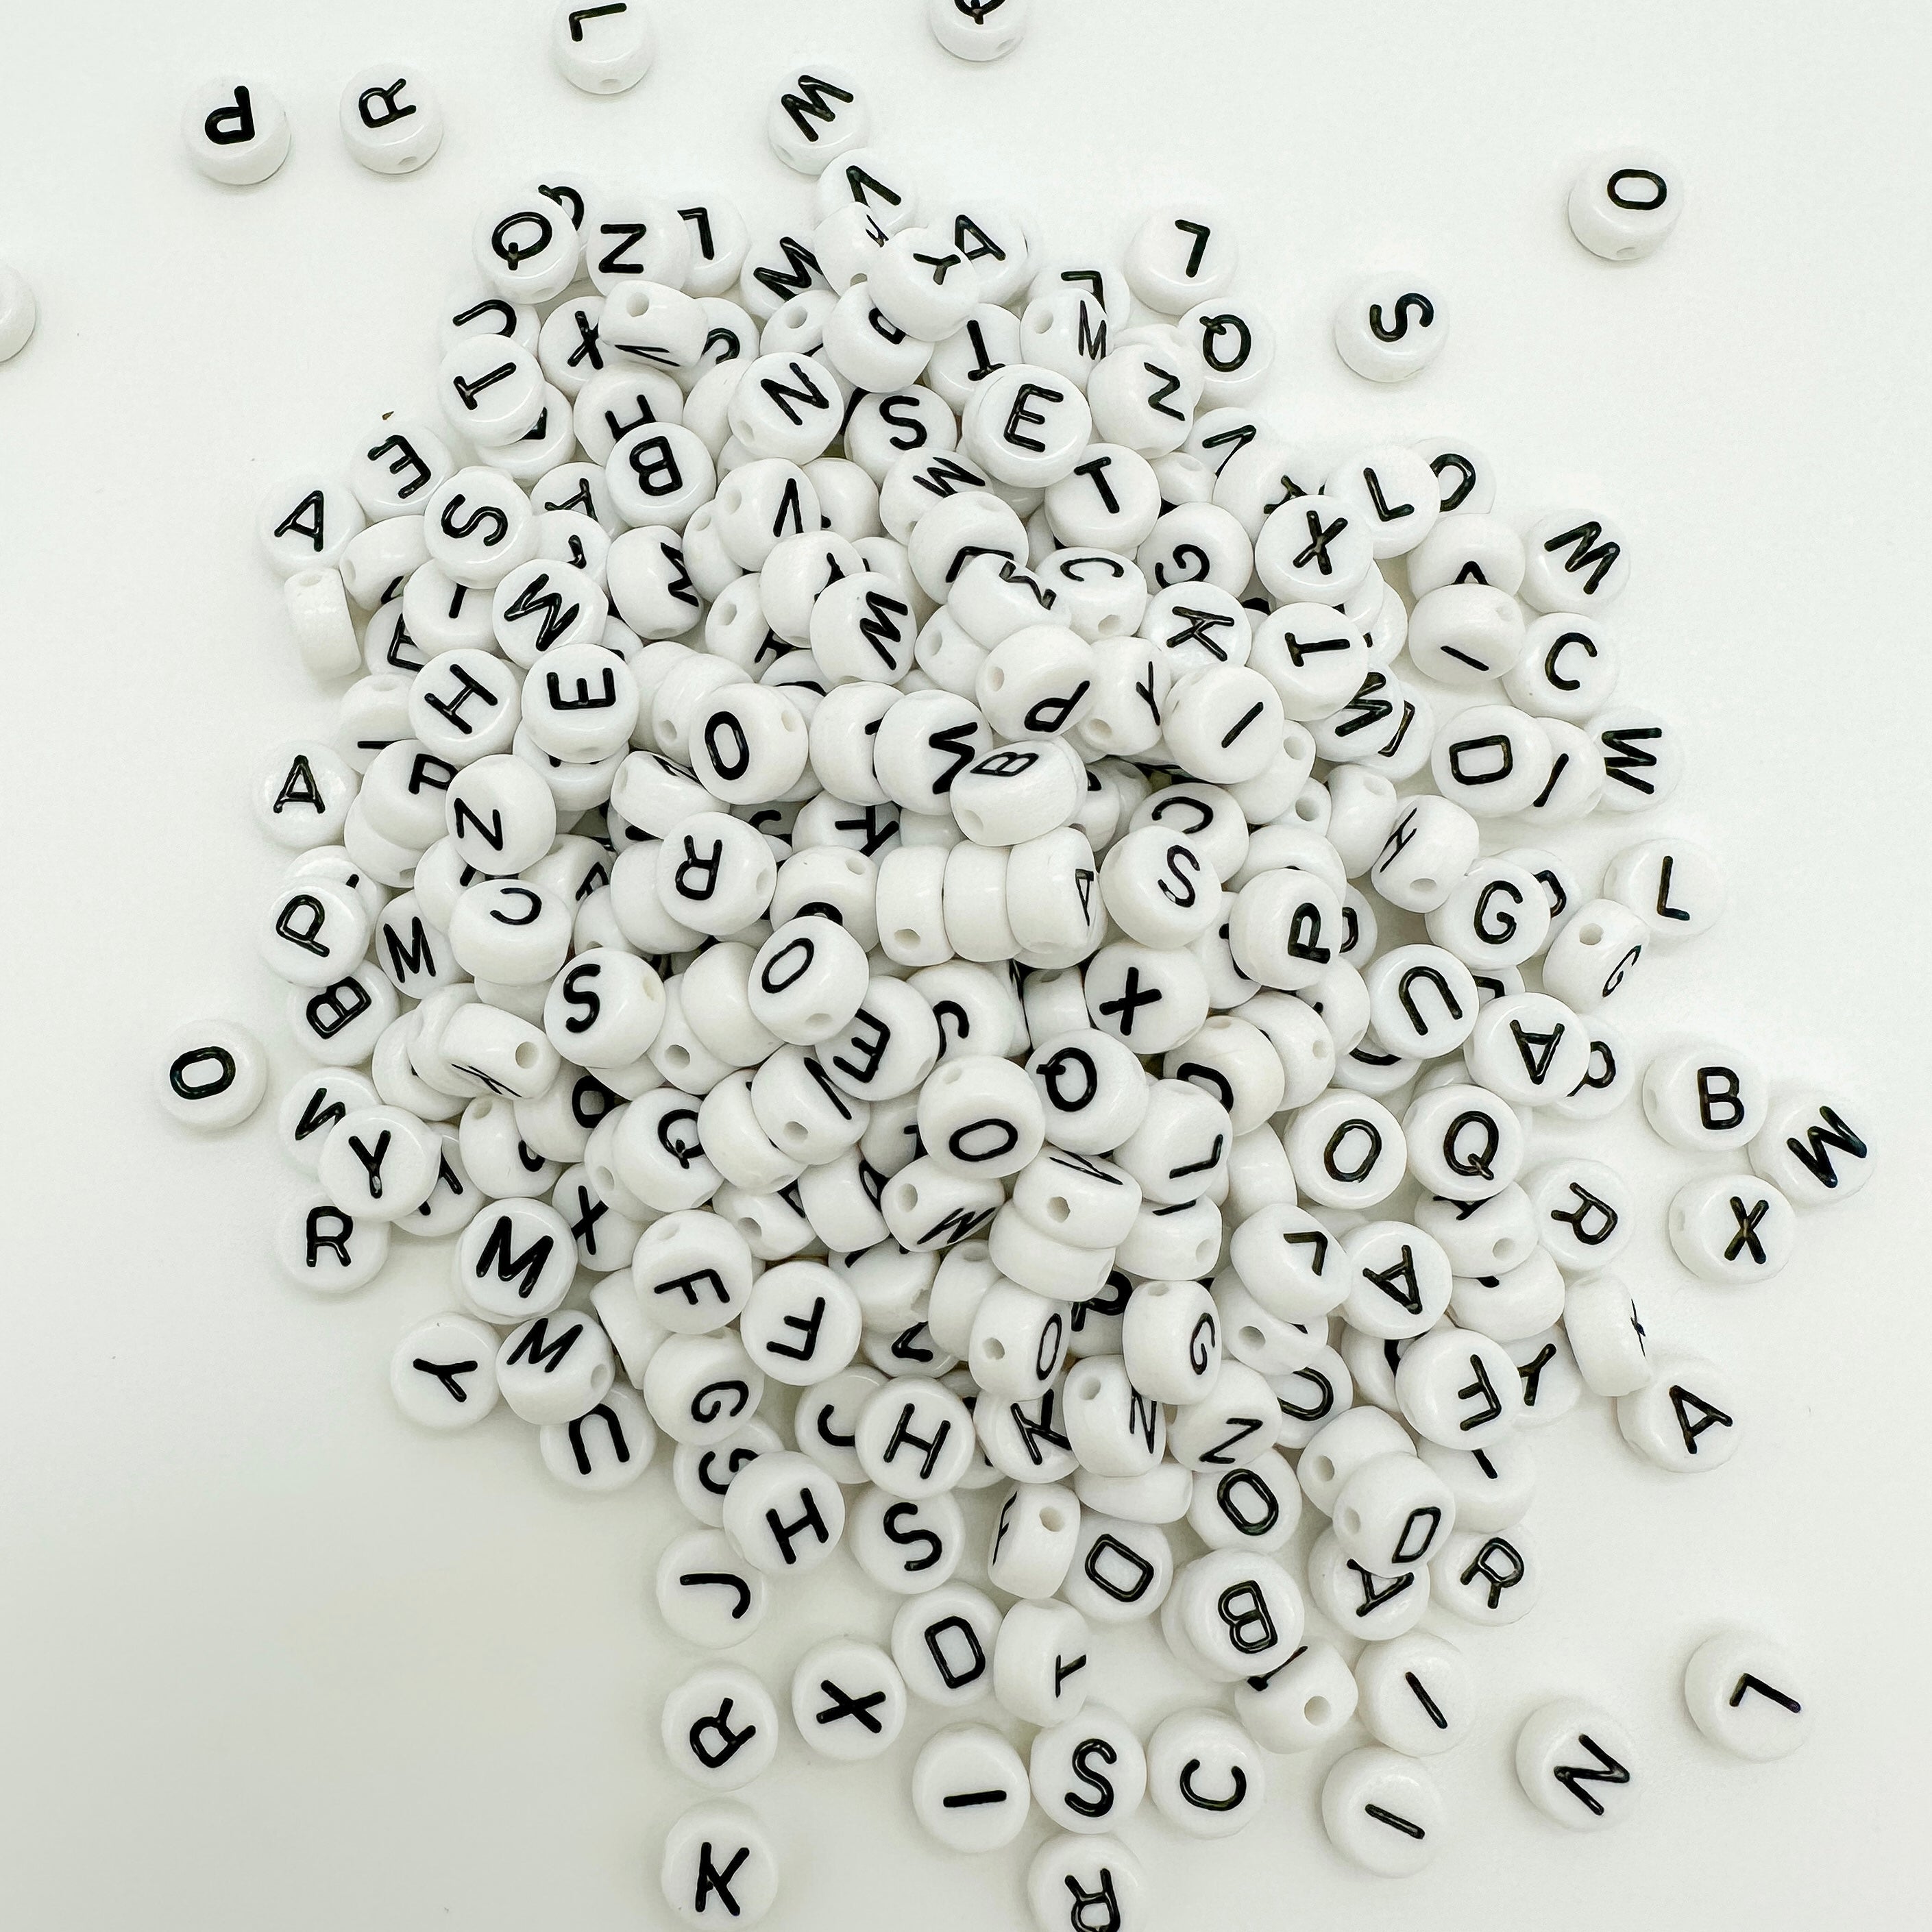 7mm acrylic letter beads, letter beads, diy bracelet, personalized bracelet, wholesale letter beads, 7mm letter beads, gold letter beads